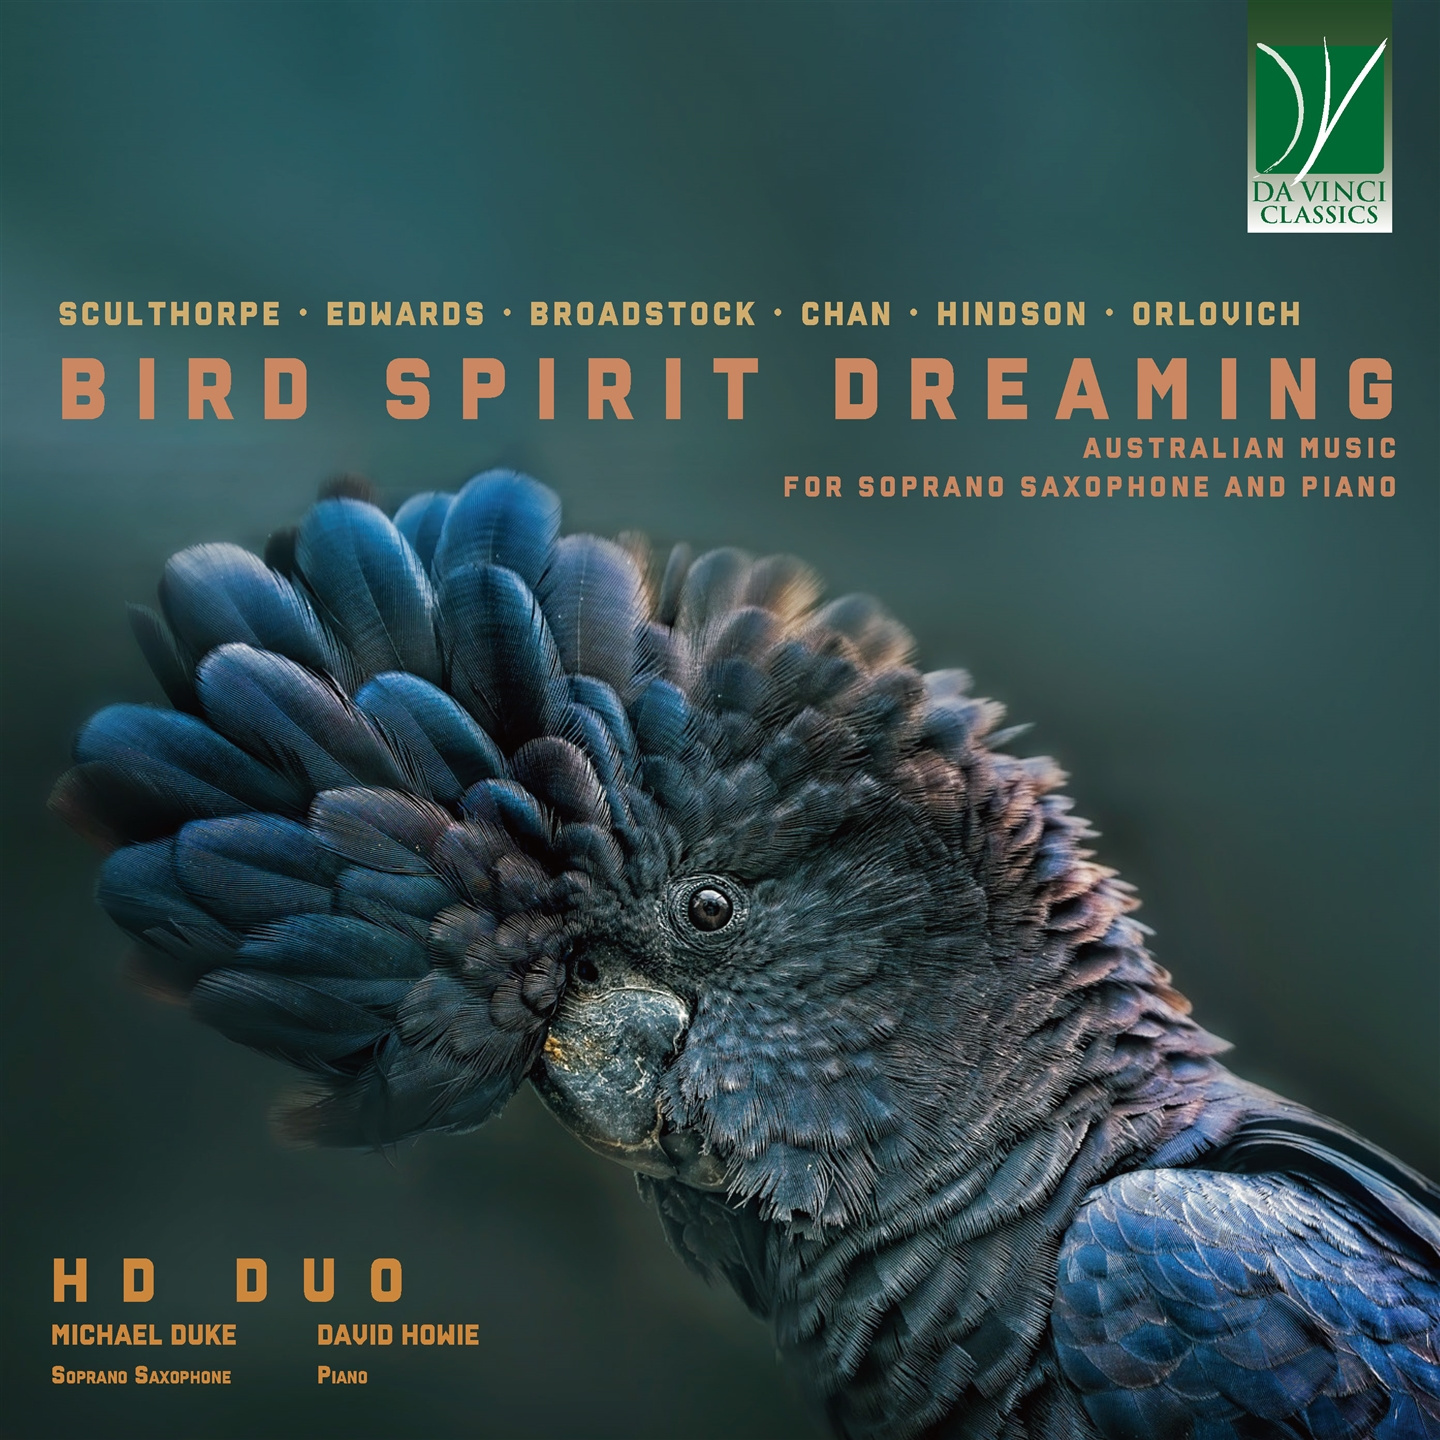 BIRD SPIRIT DREAMING: AUSTRALIAN MUSIC FOR SOPRANO SAXOPHONE AND PIANO